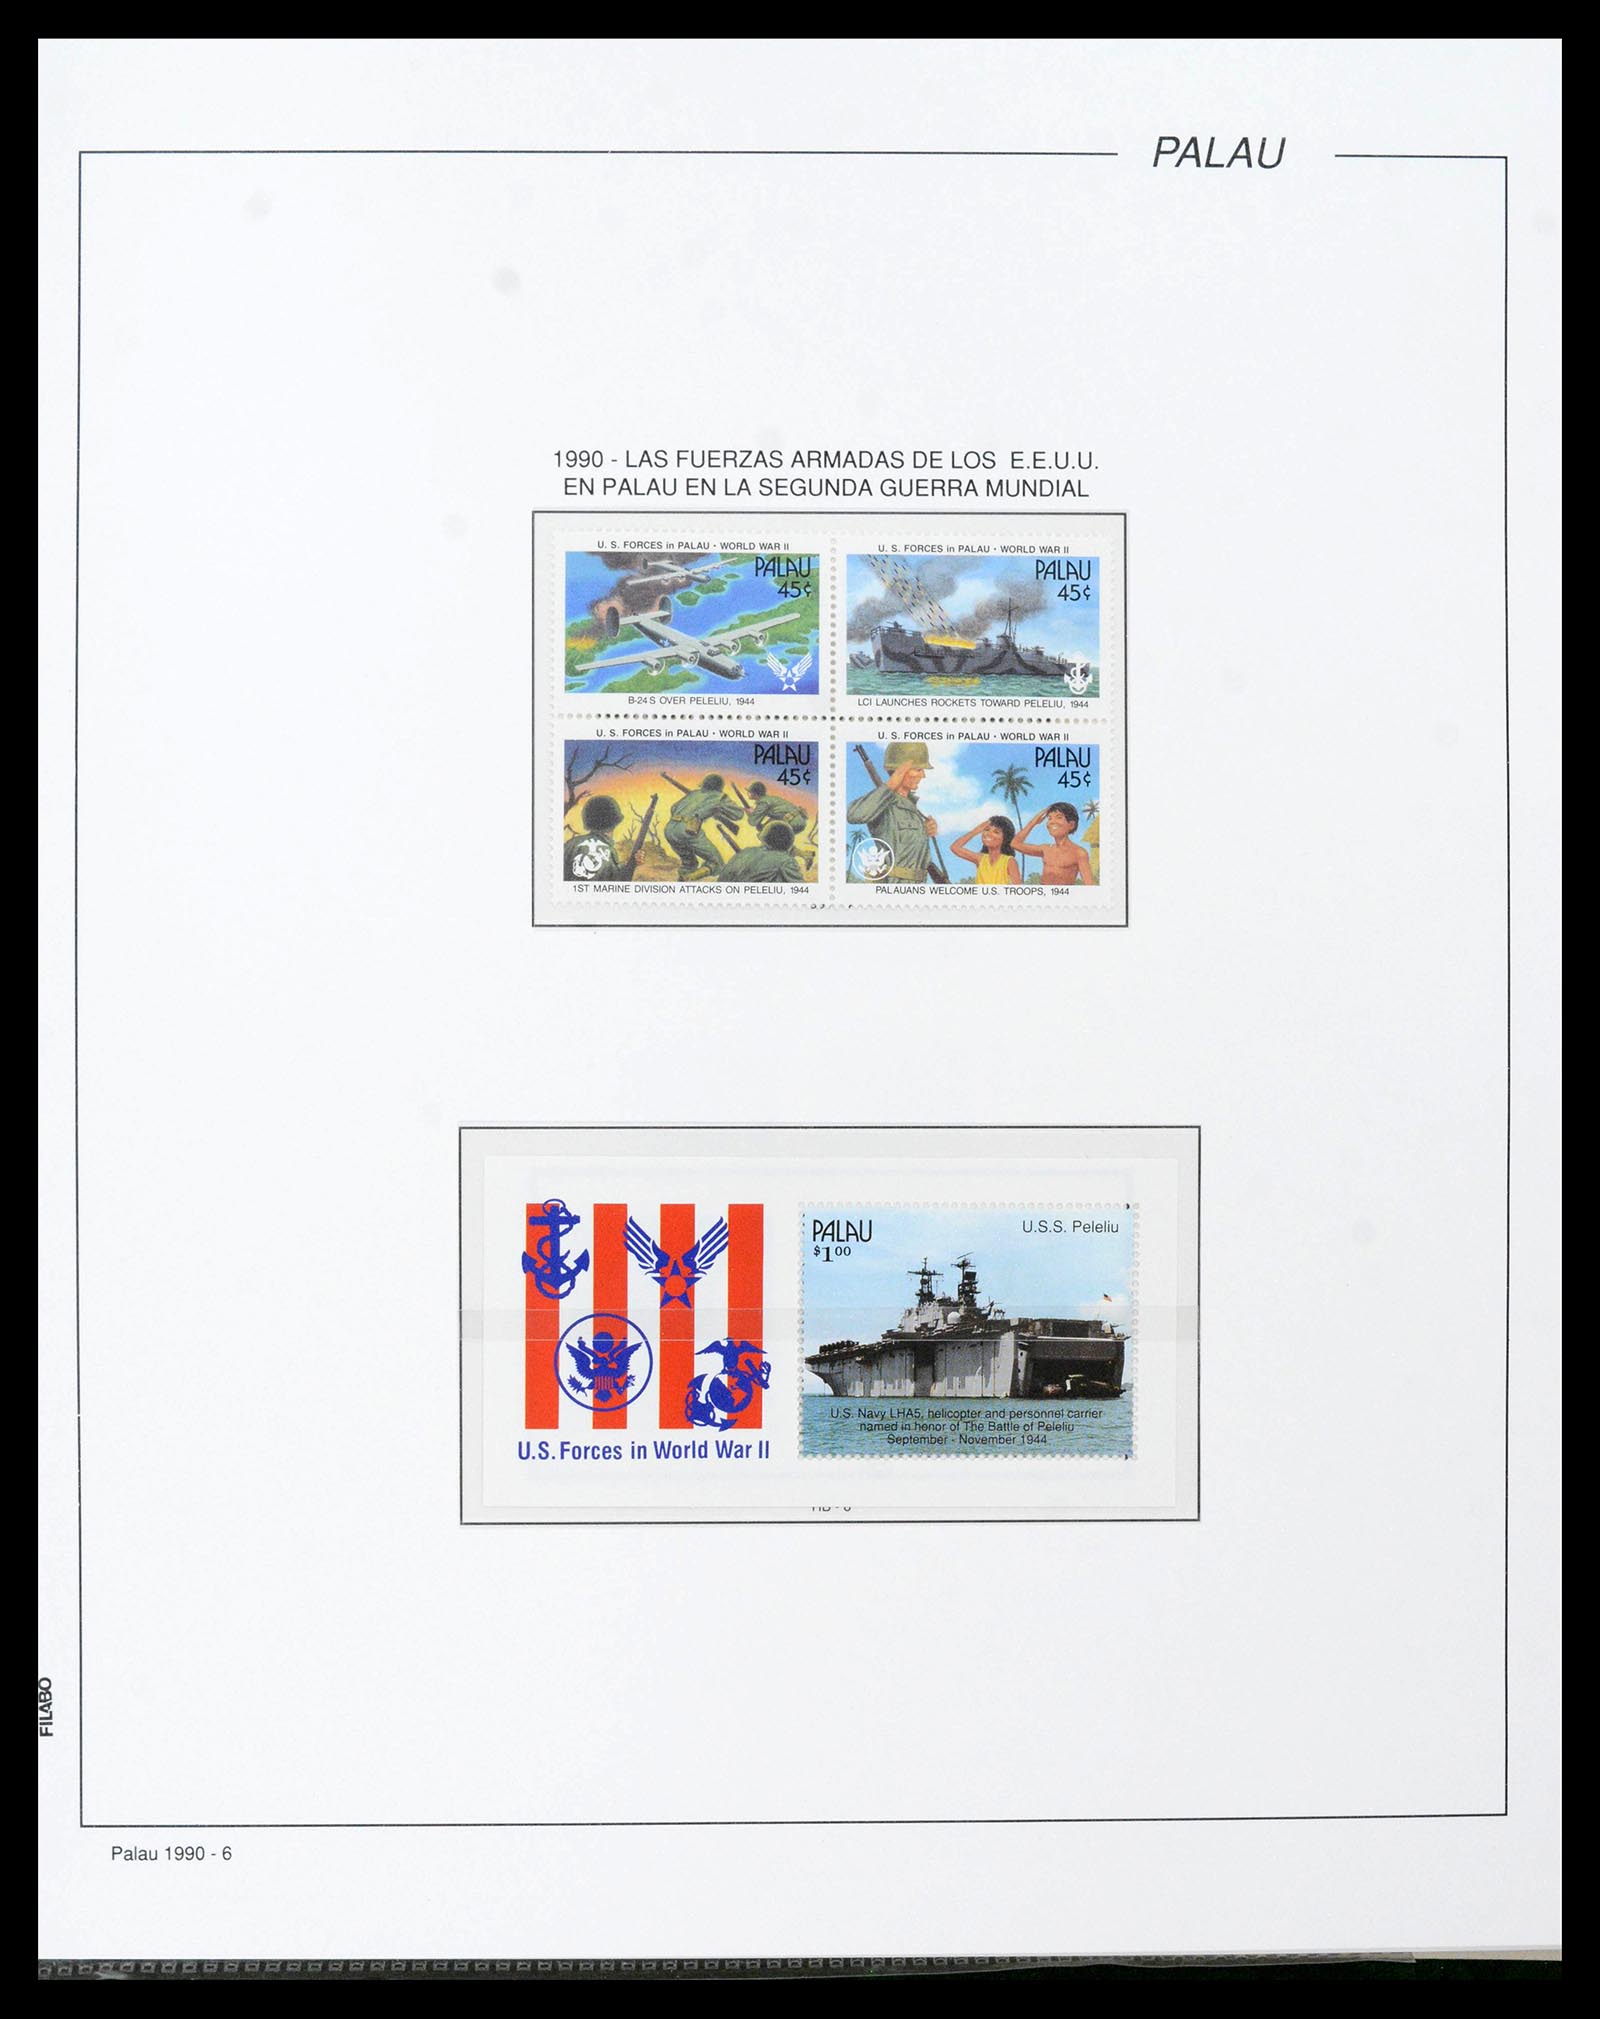 39222 0038 - Stamp collection 39222 Palau, Micronesia and Marshall islands 1980-1995.